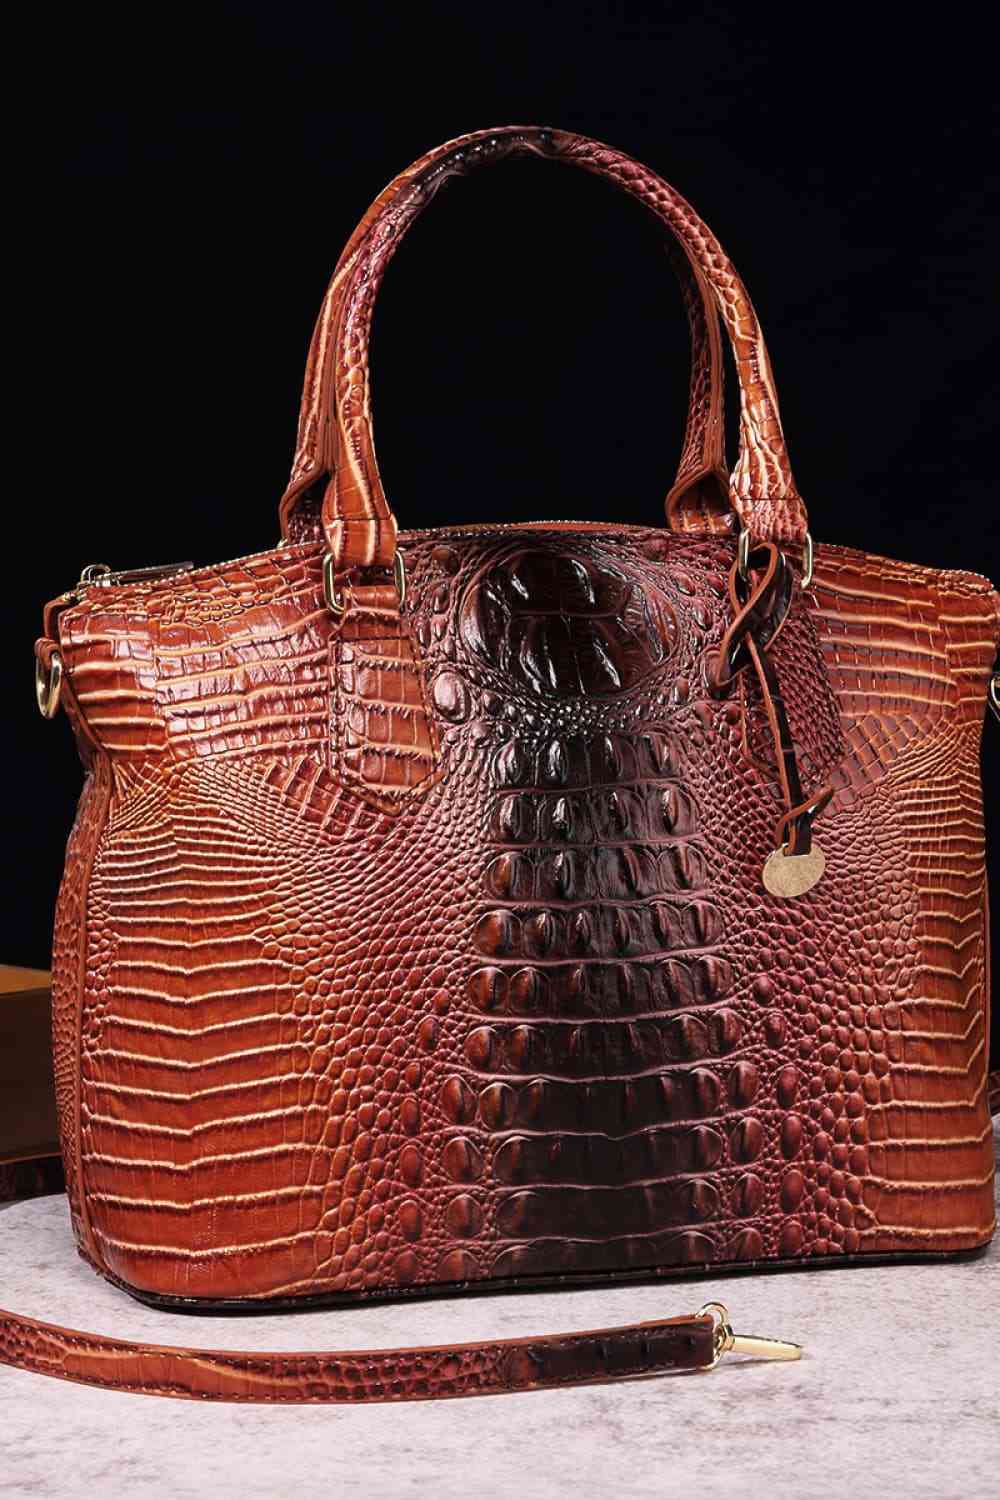 Gradient PU Leather Handbag 12 Colors!